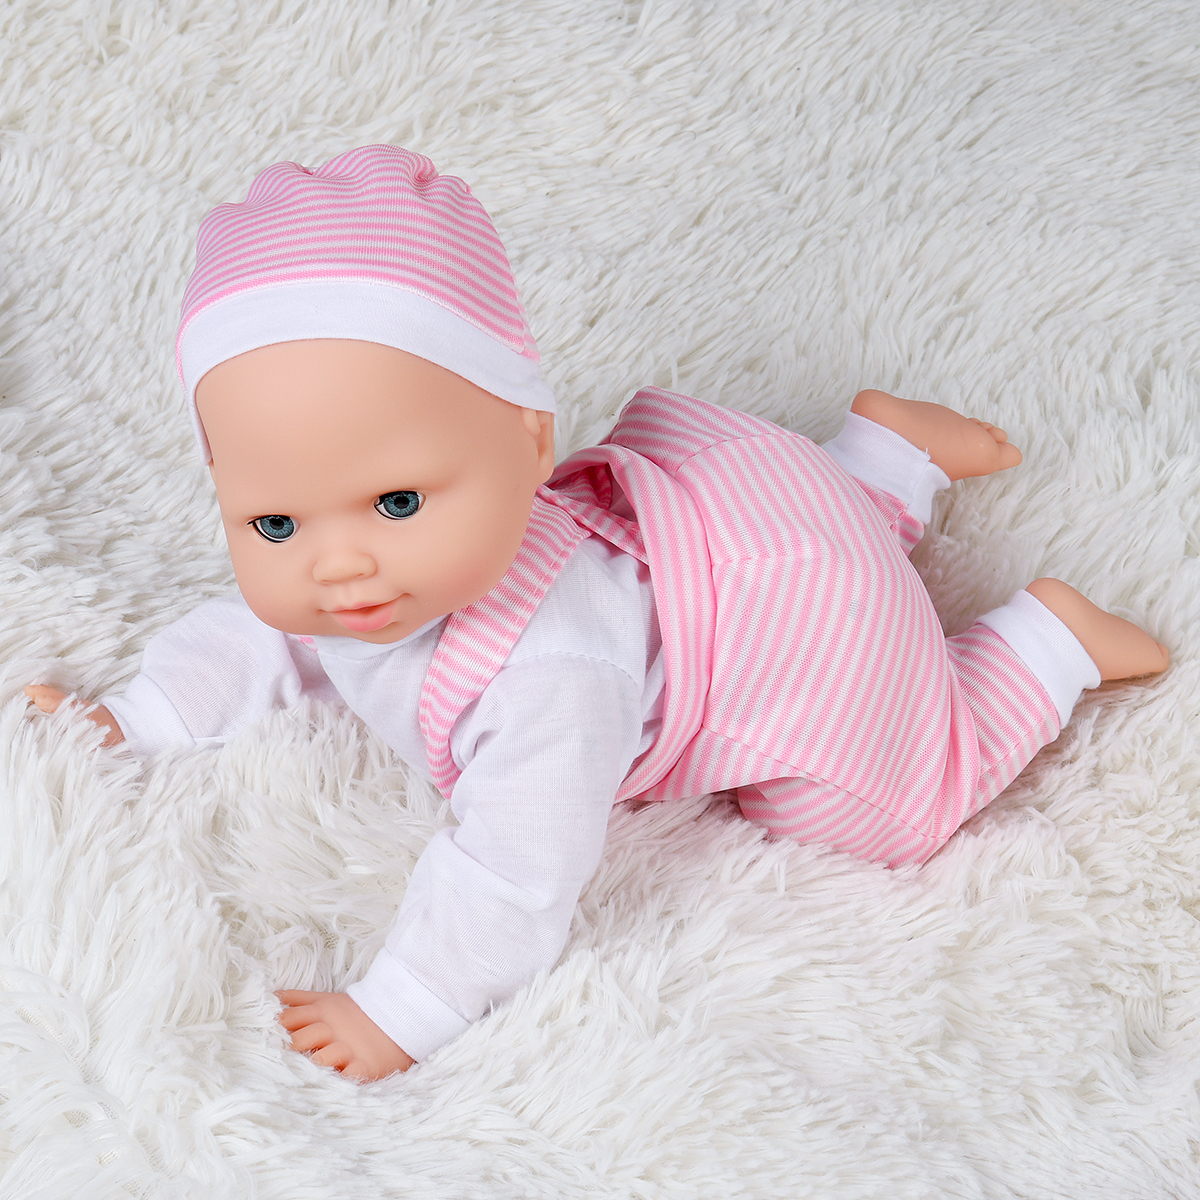 13Inch-Simulation-Vinyl-Doll-Crawling-Doll-Baby-Crawling-Toddler-Simulation-Doll-Childrens-Toys-1818658-3